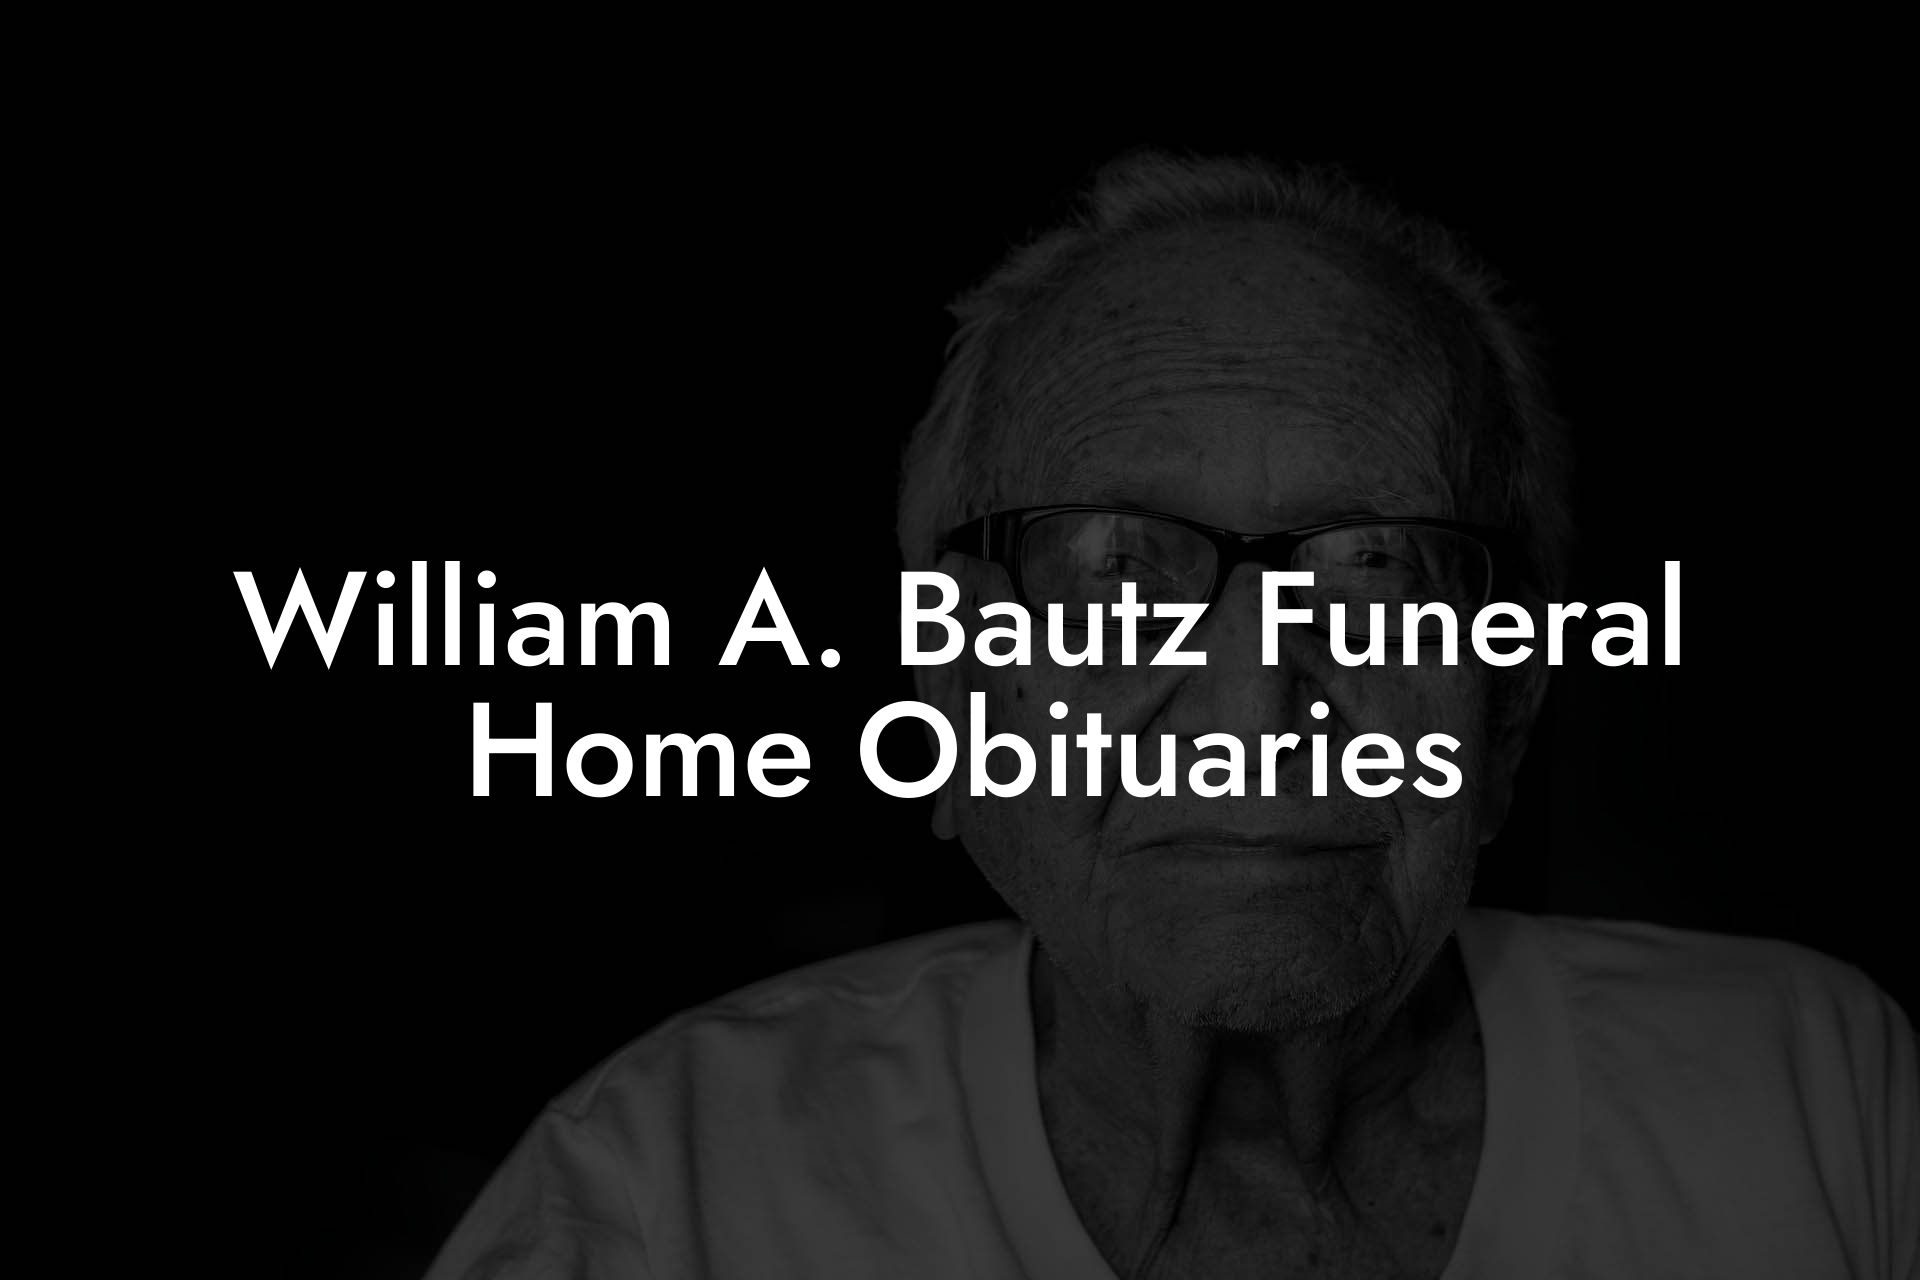 William A. Bautz Funeral Home Obituaries